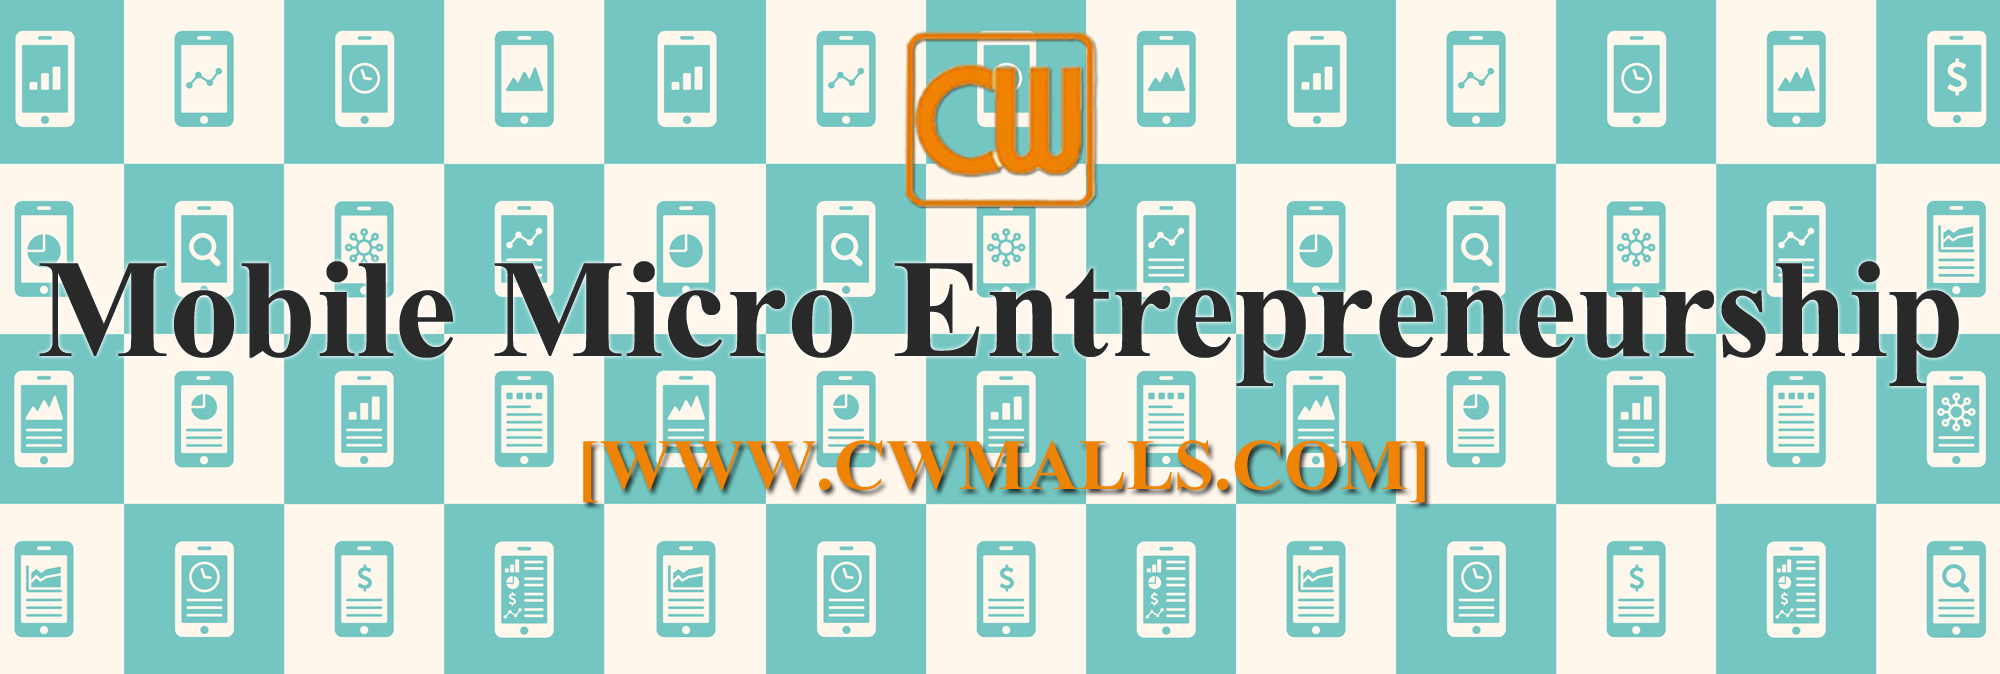 CWMALLS Mobile Micro Entrepreneurship